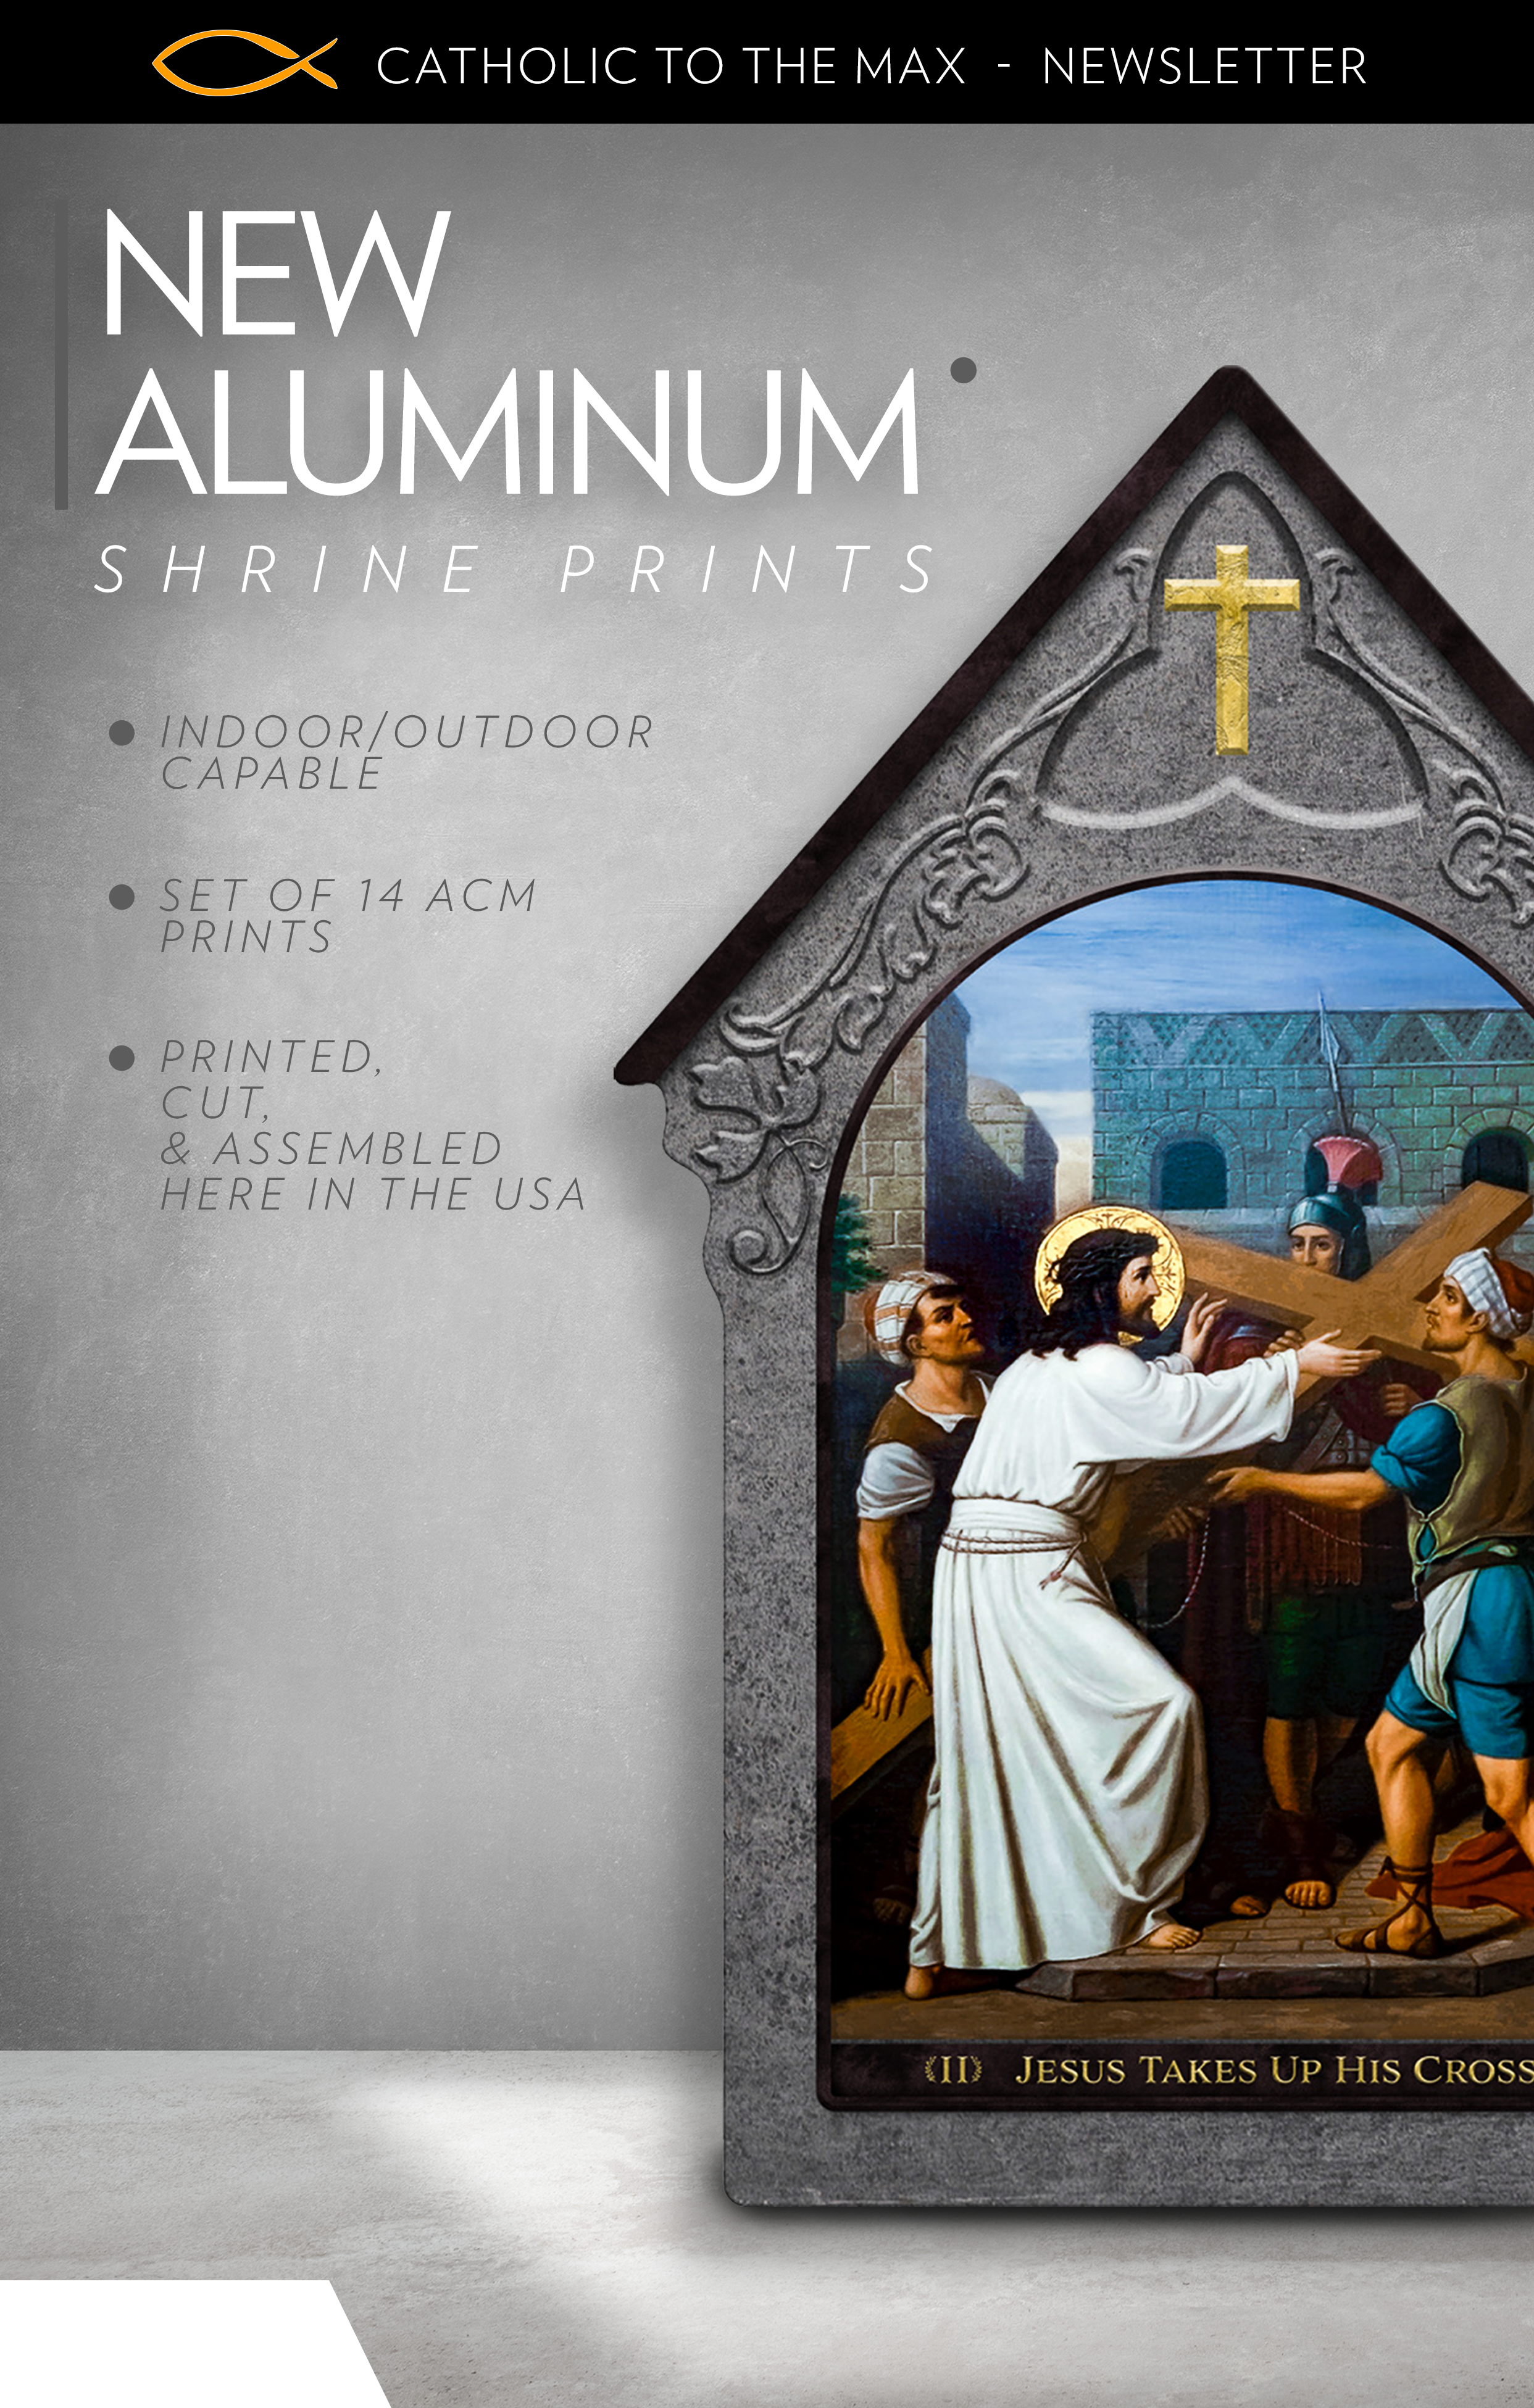 New Aluminum Shrine Prints